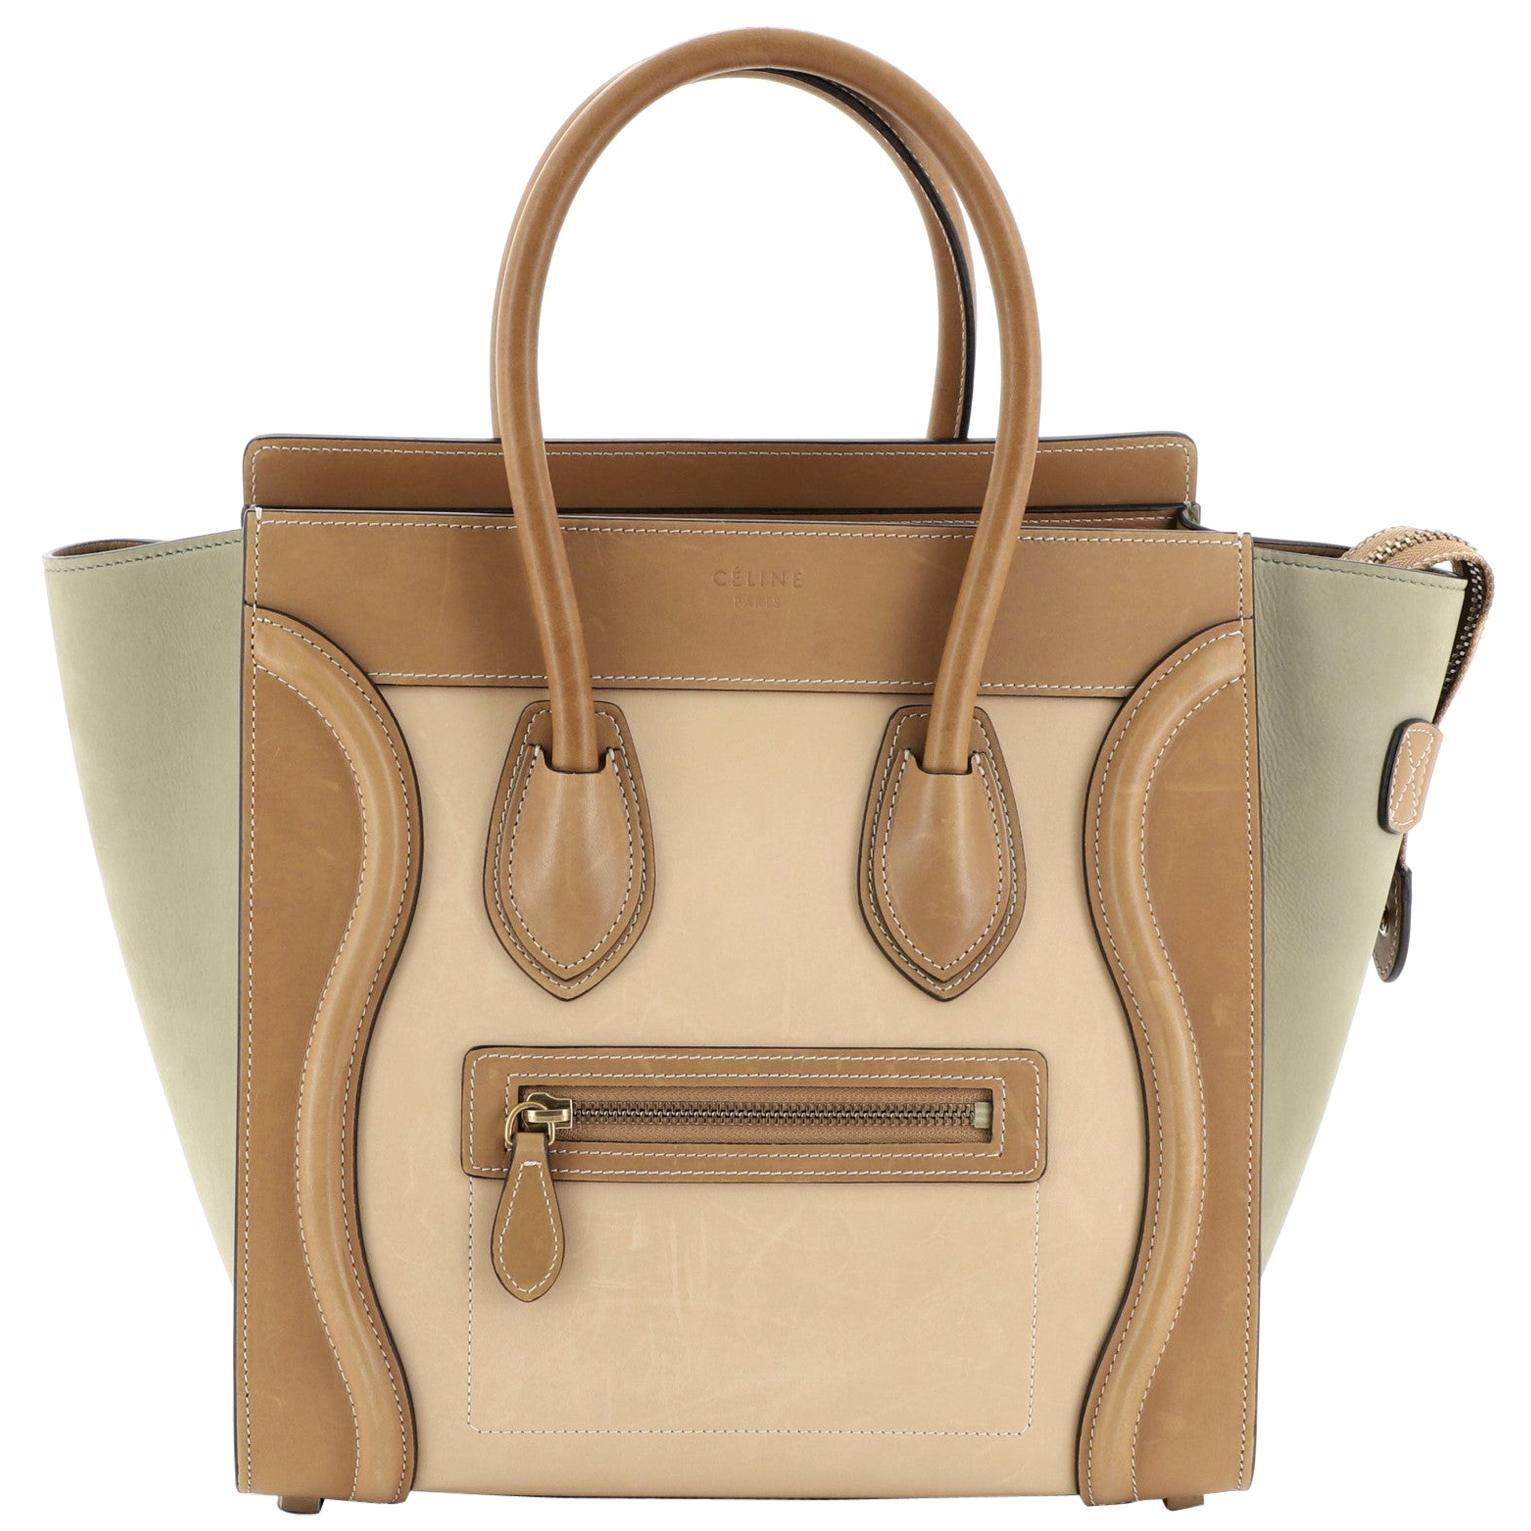 Celine Tricolor Luggage Handbag Leather Micro